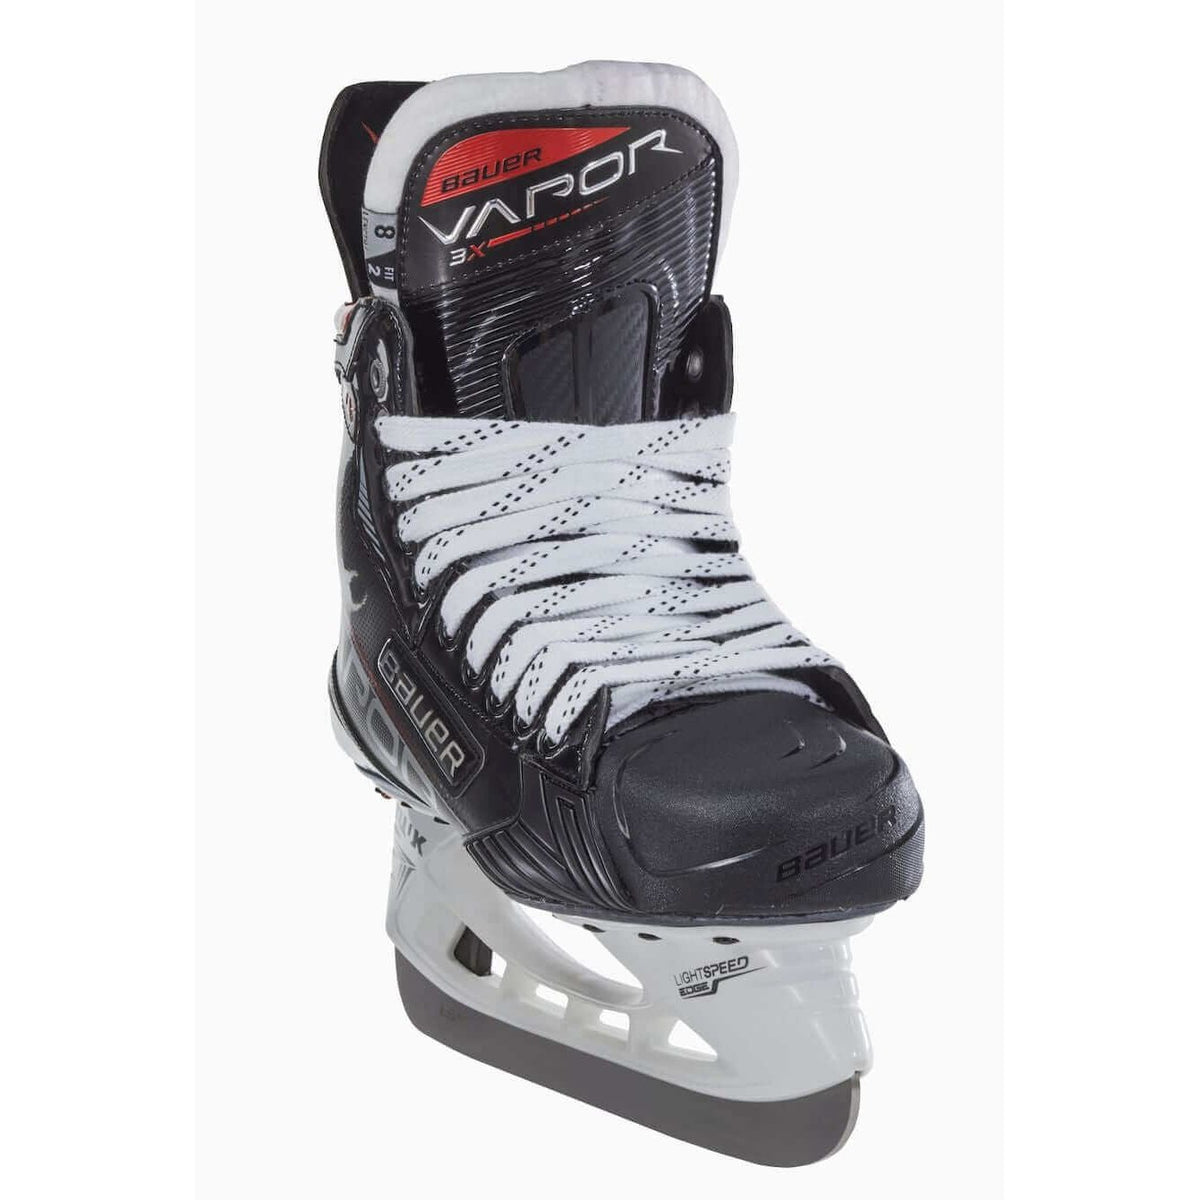 Bauer S21 Vapor 3X Ice Hockey Skates Intermediate